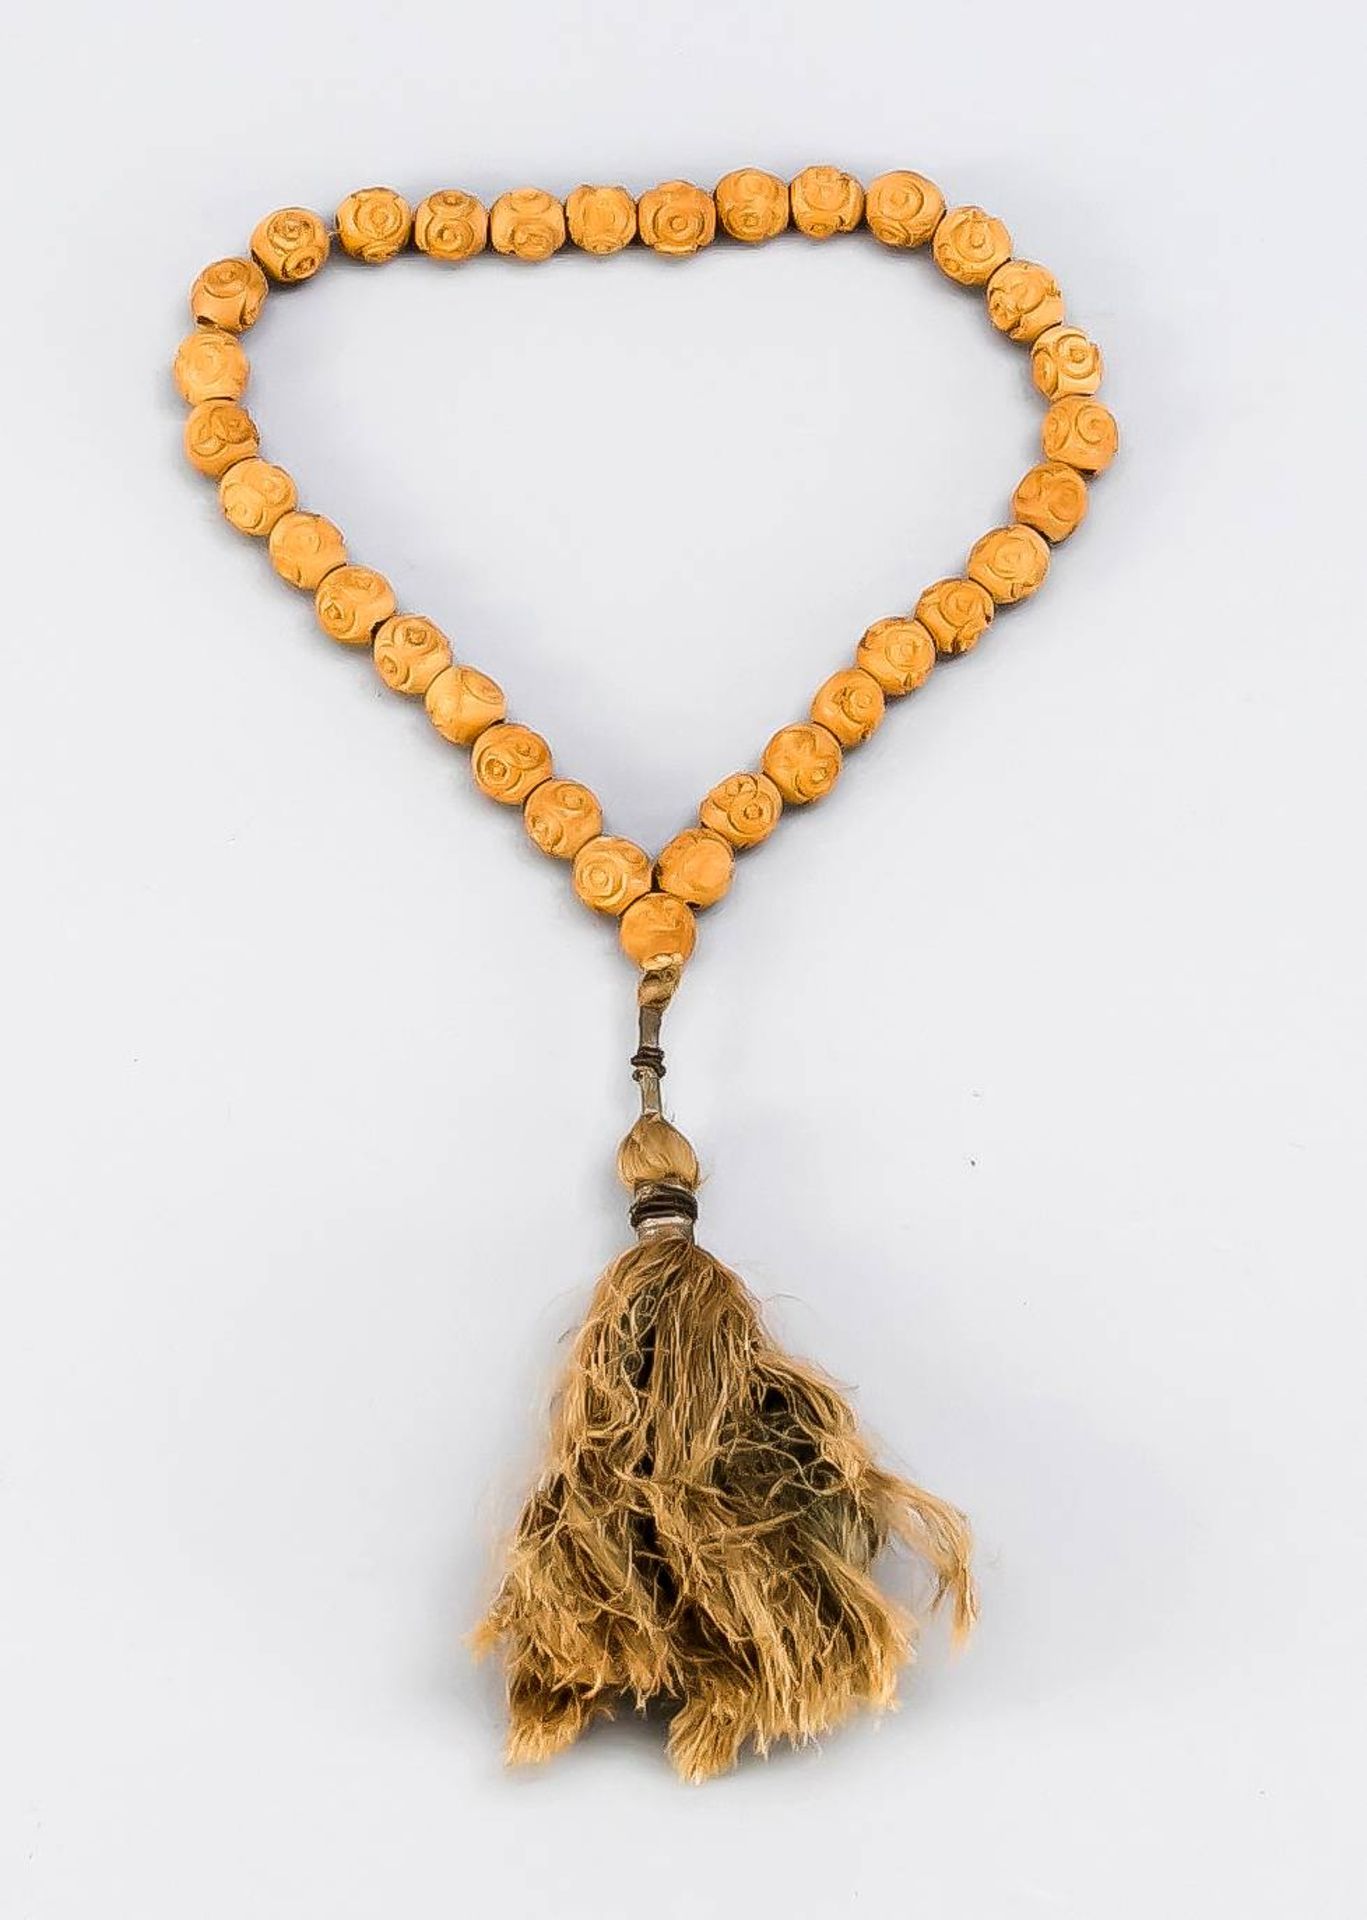 Prayer chain (tesbih), sandalwood, 1. H. 20th century, wooden beads with geometric